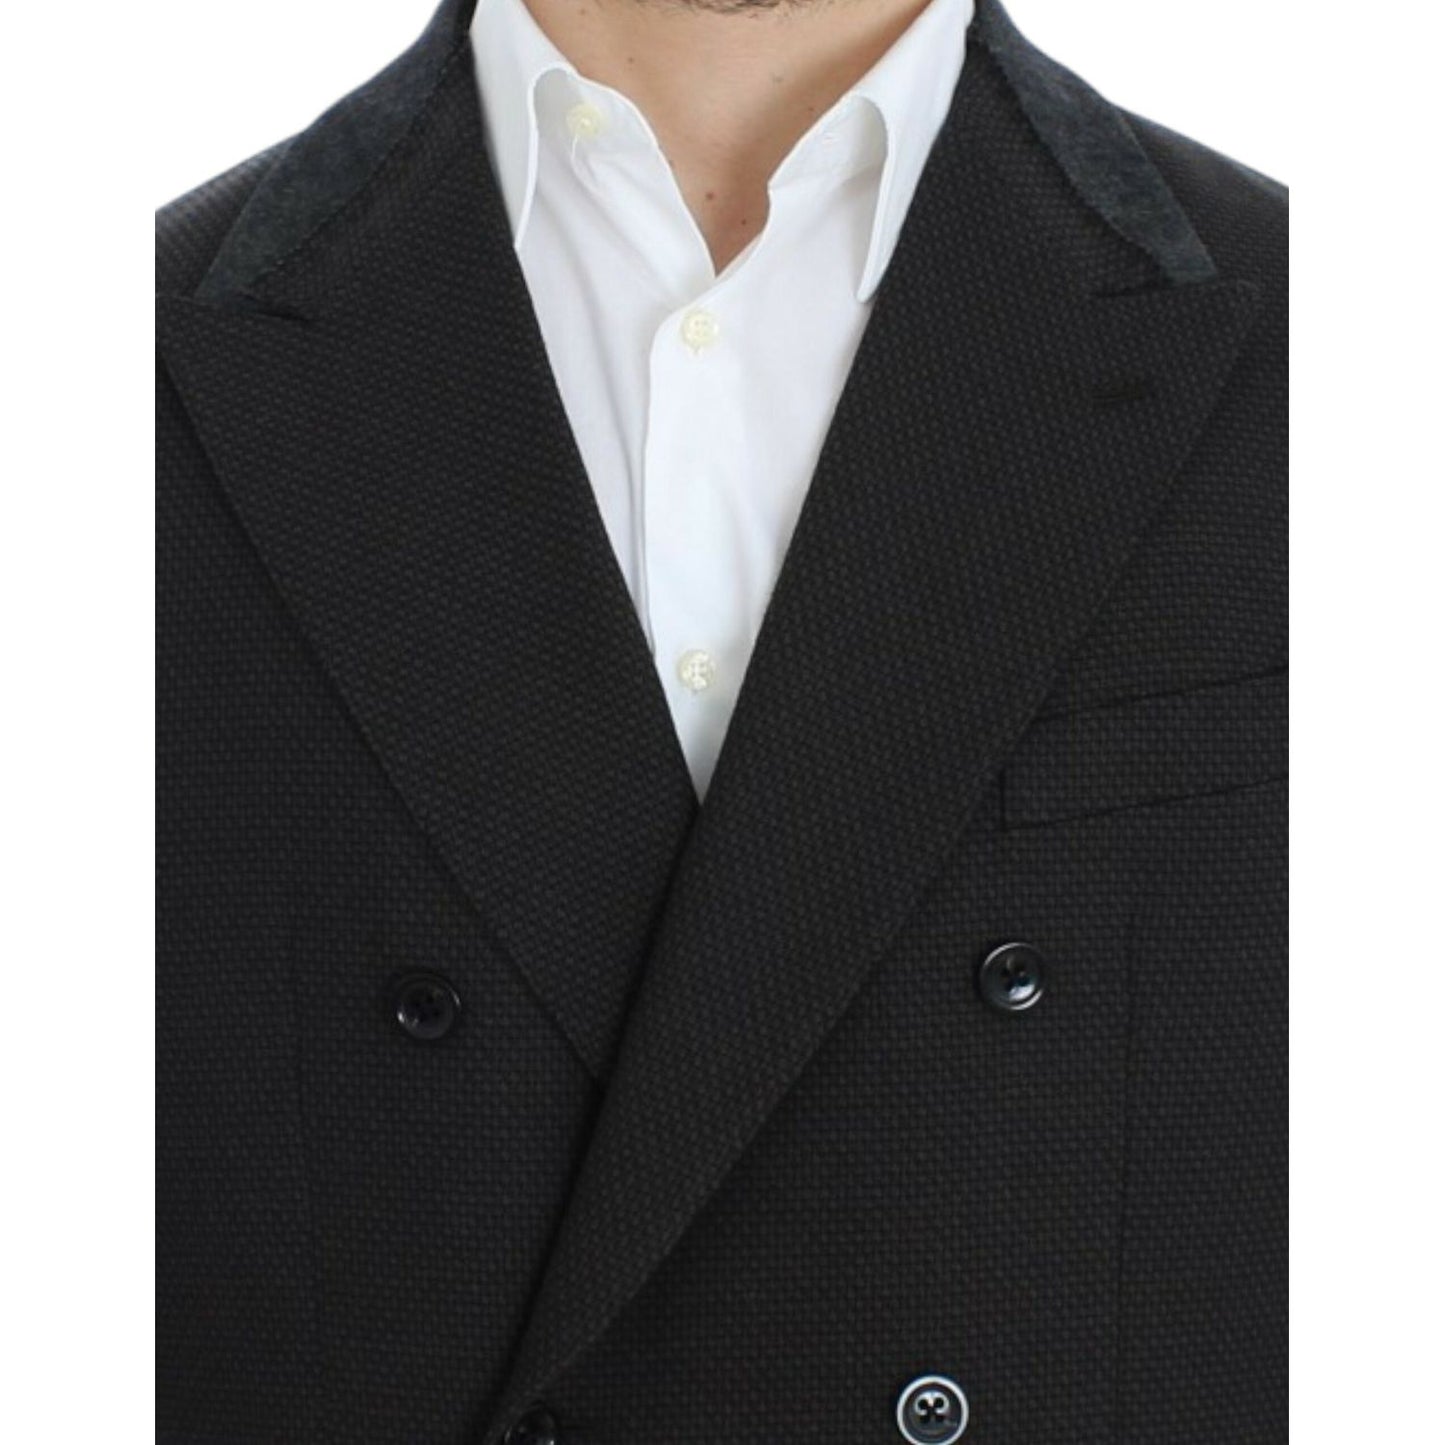 Dolce & Gabbana Elegant Slim Fit Double Breasted Blazer brown-wool-slim-fit-blazer 13251-brown-wool-slim-fit-blazer-3-4-scaled-8c8da304-b50.jpg